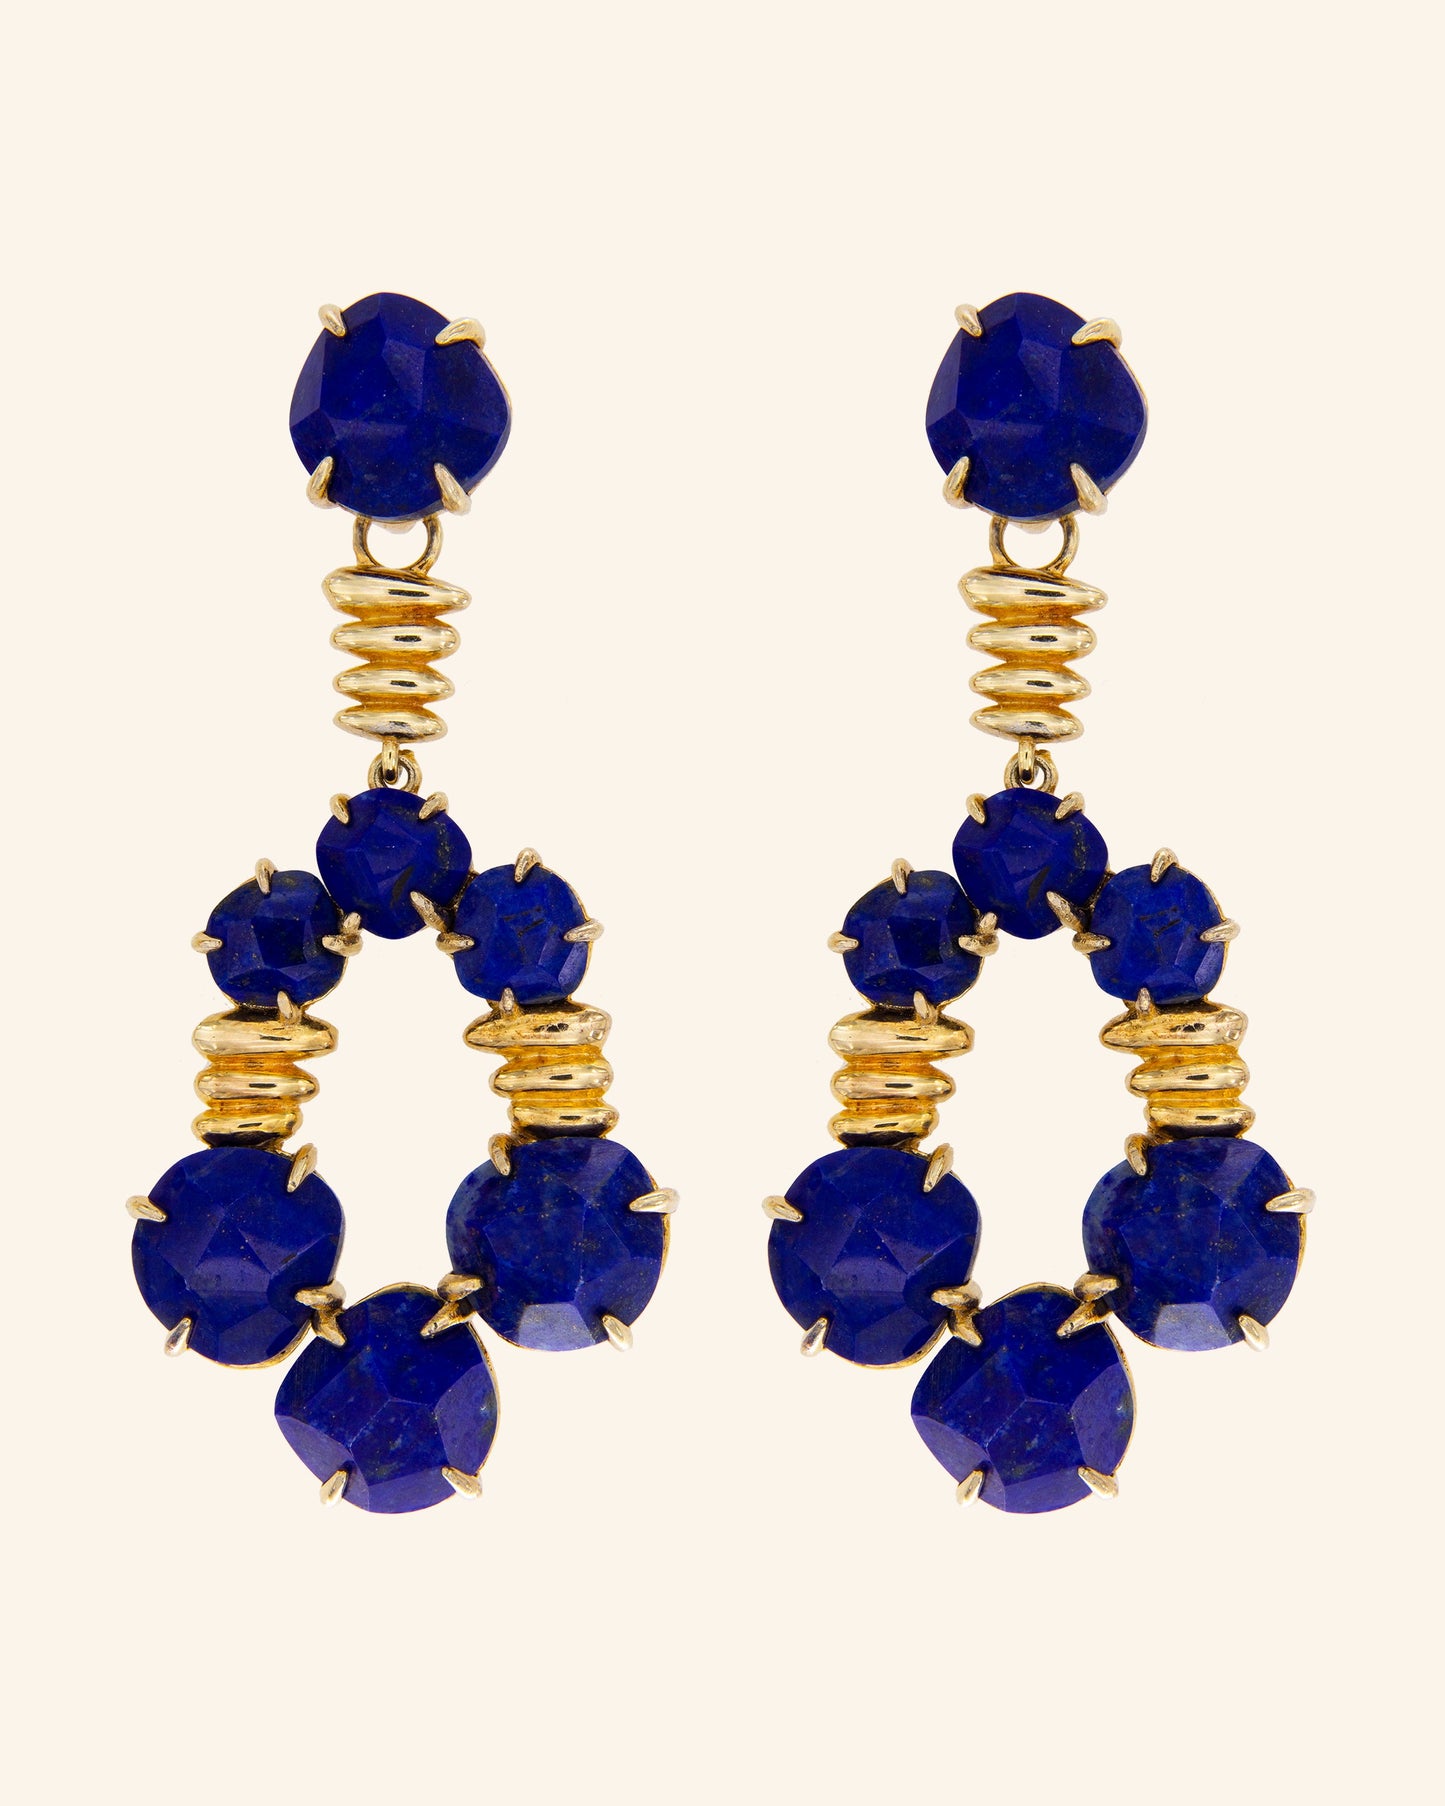 Nile earrings with lapis lazuli